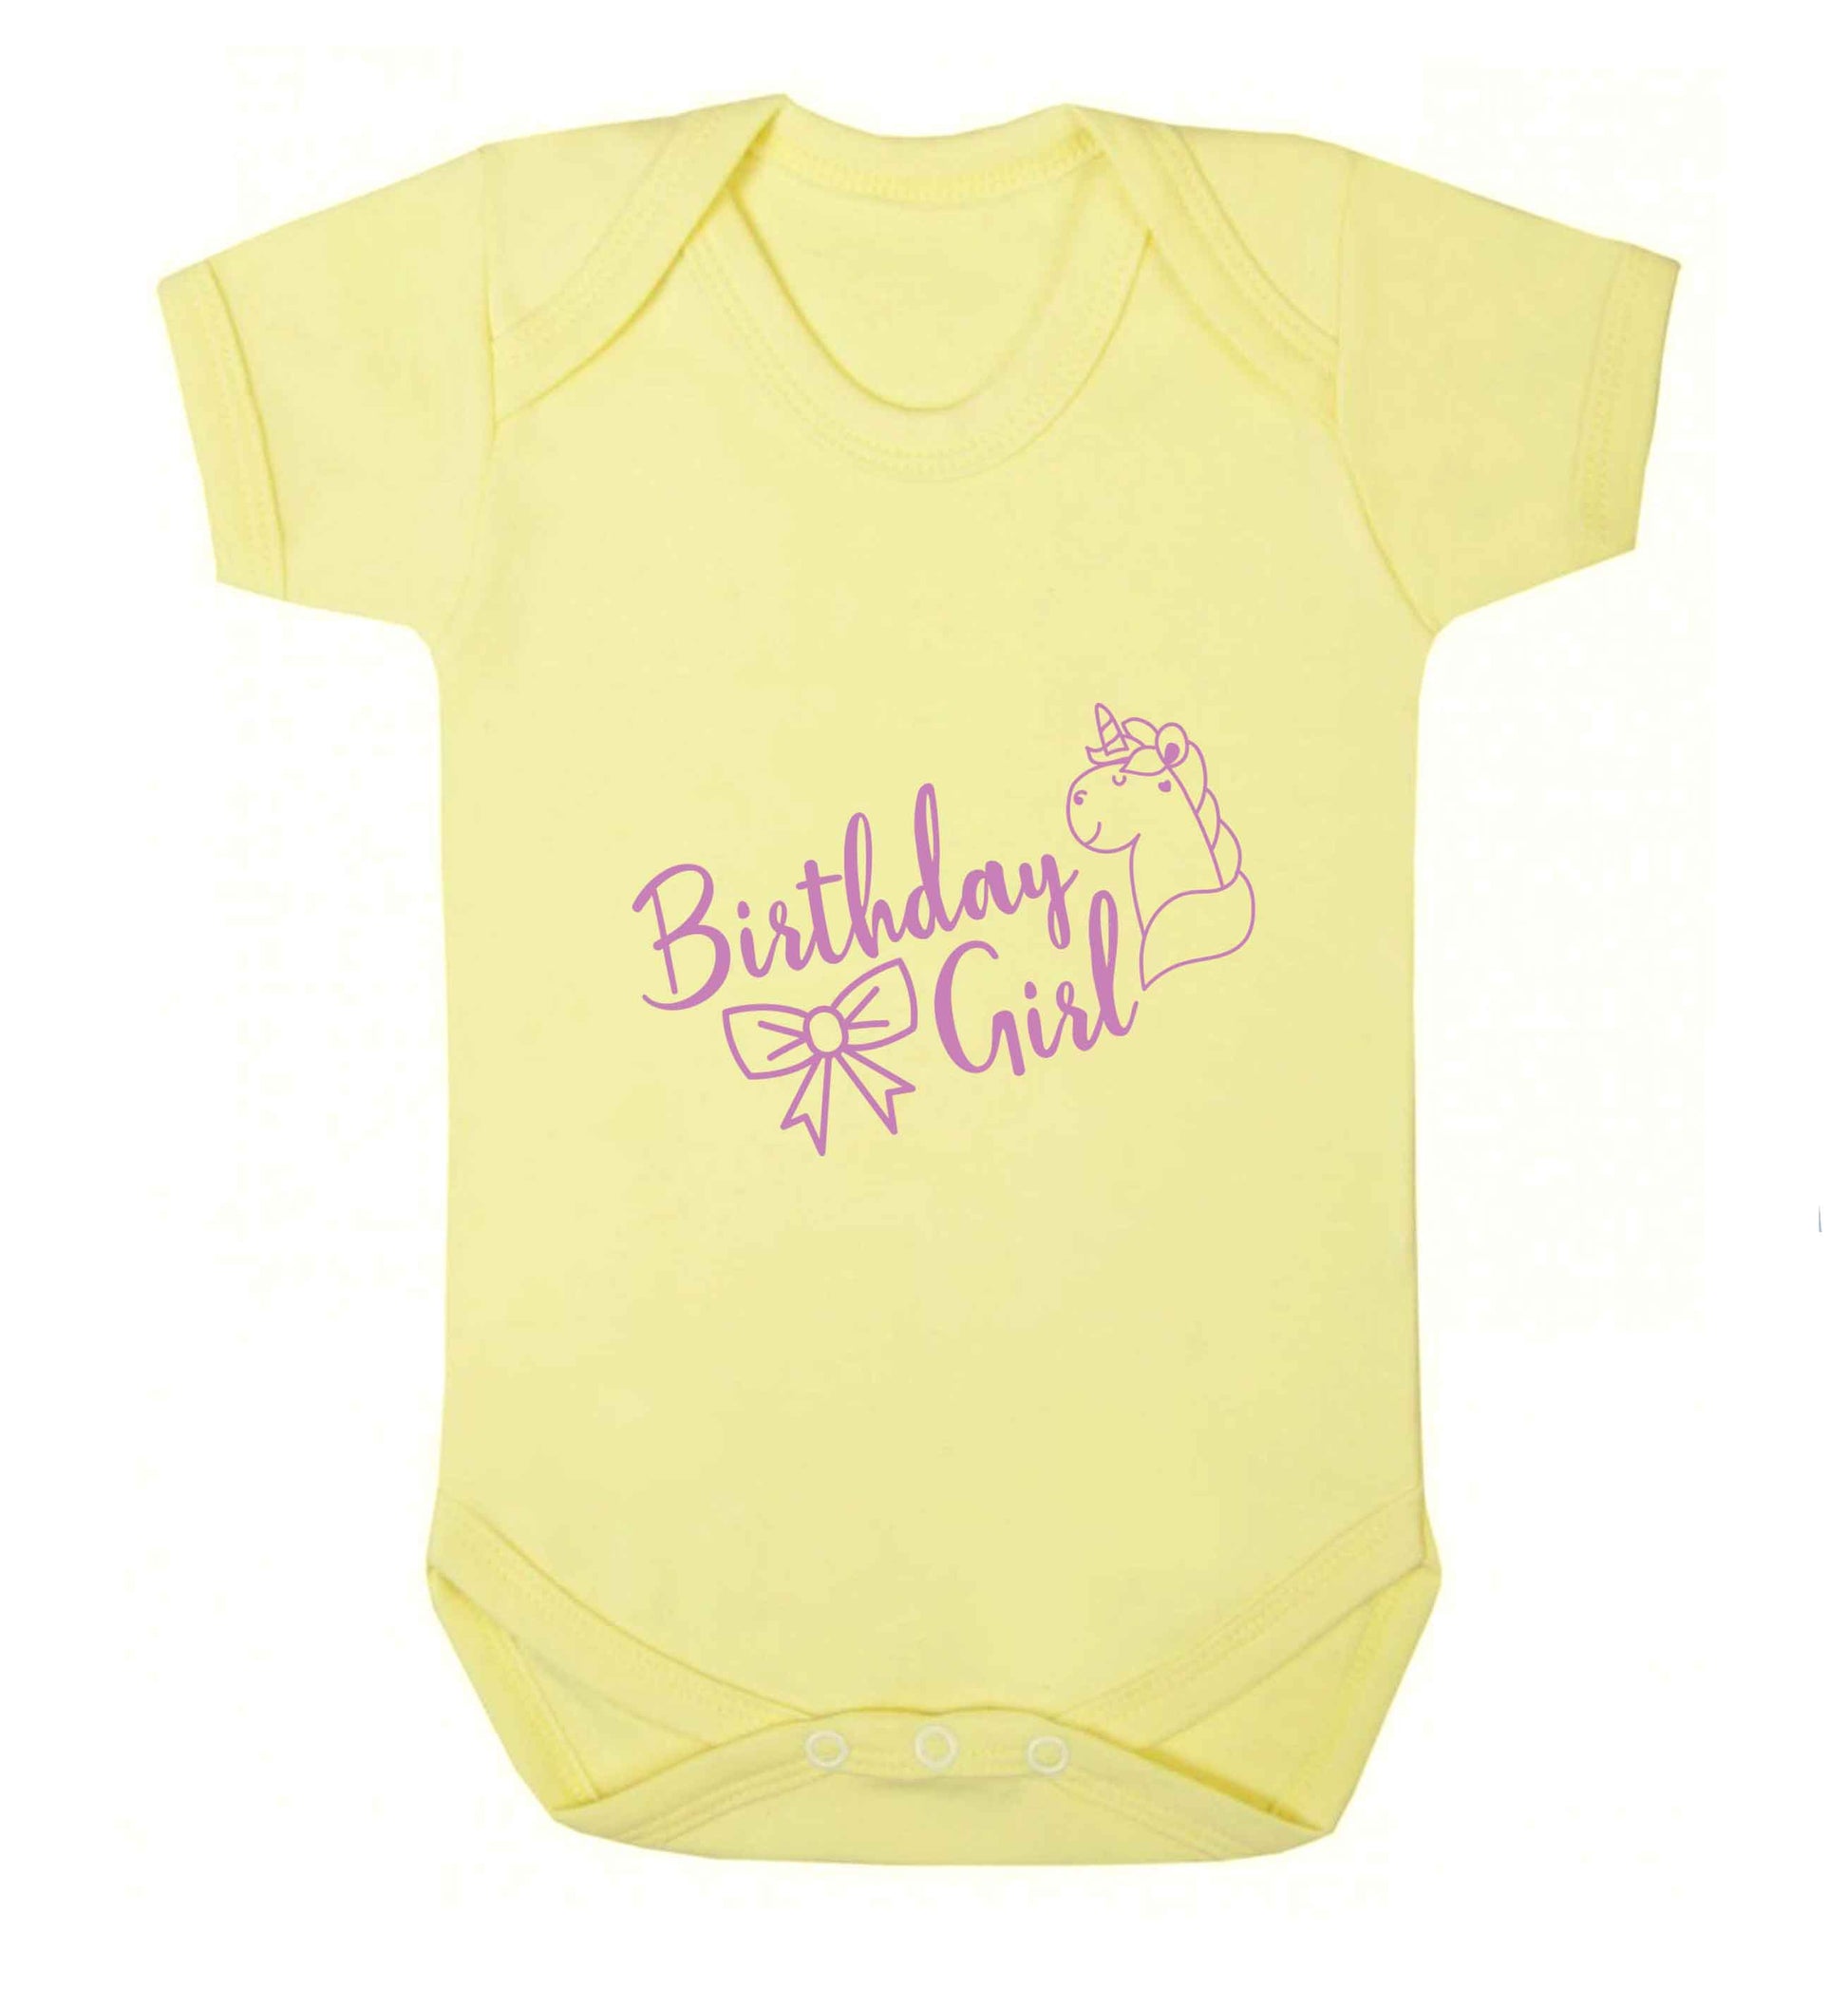 Birthday girl baby vest pale yellow 18-24 months